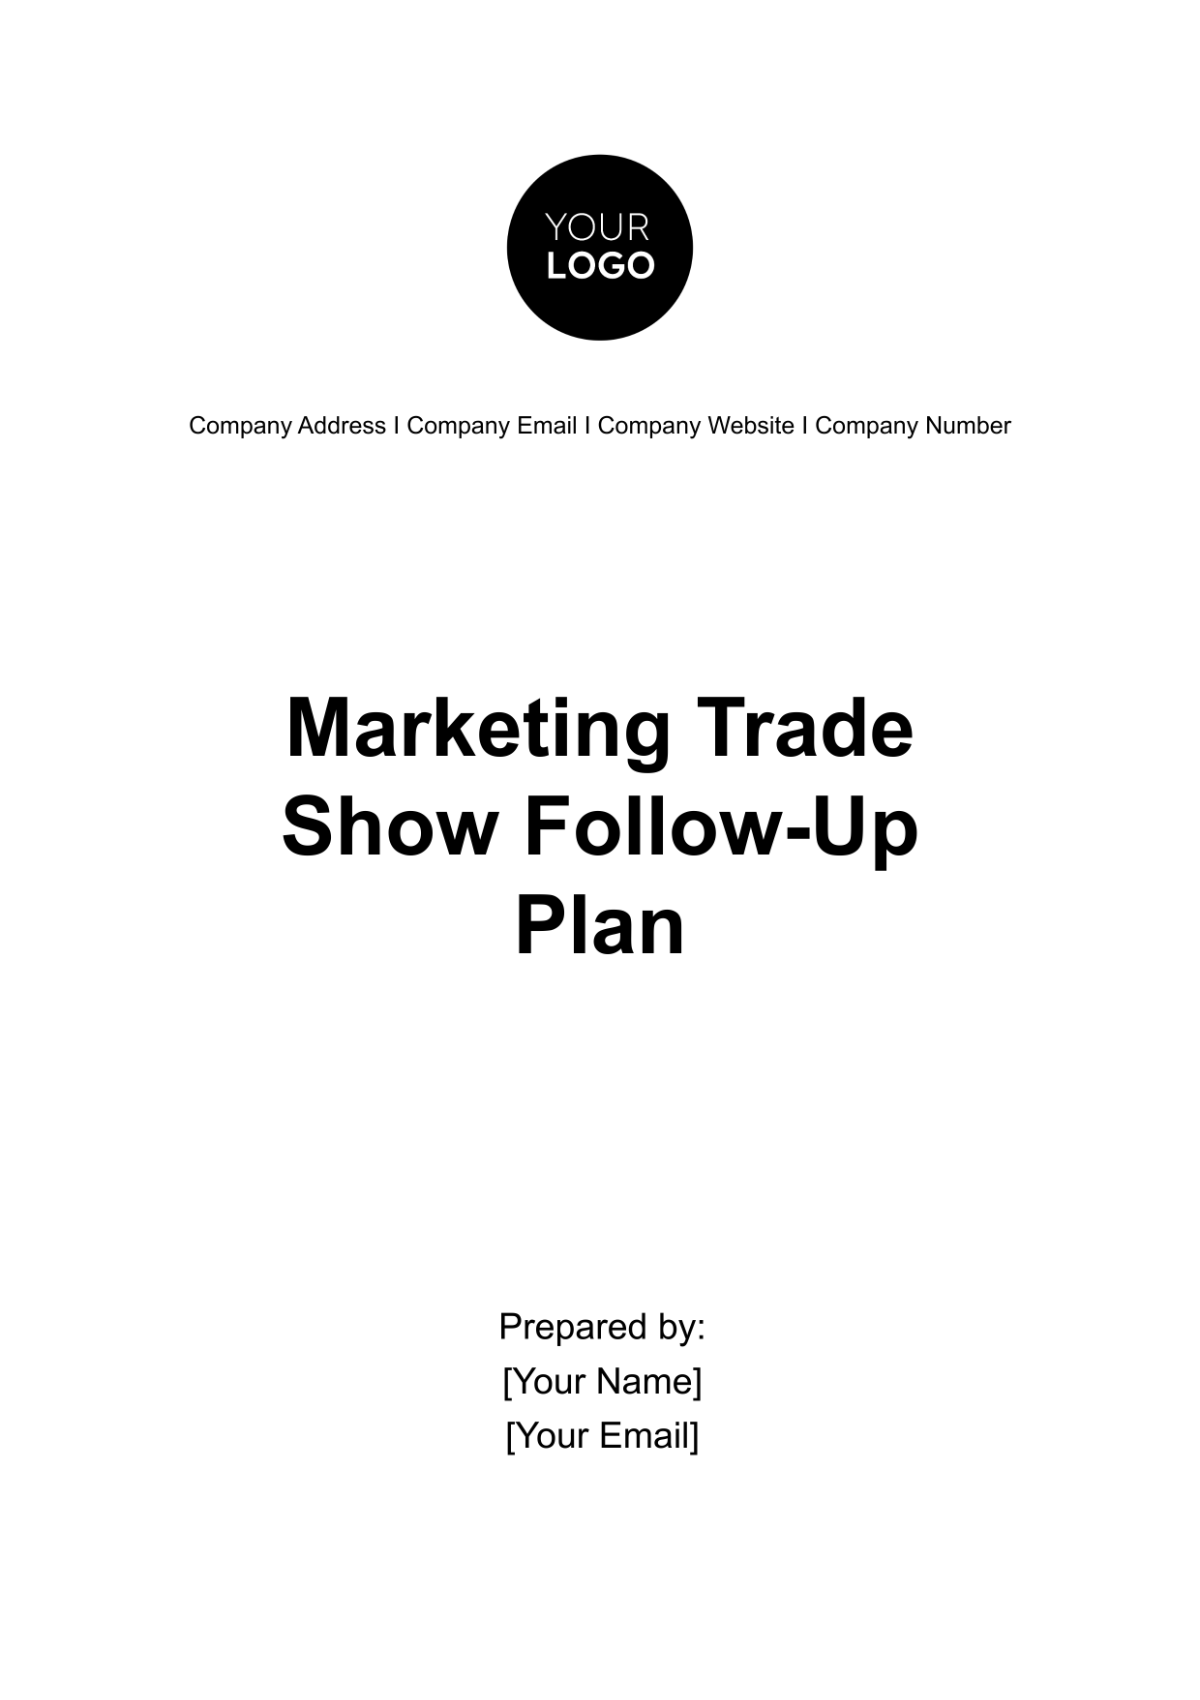 Free Marketing Trade Show Follow-up Plan Template